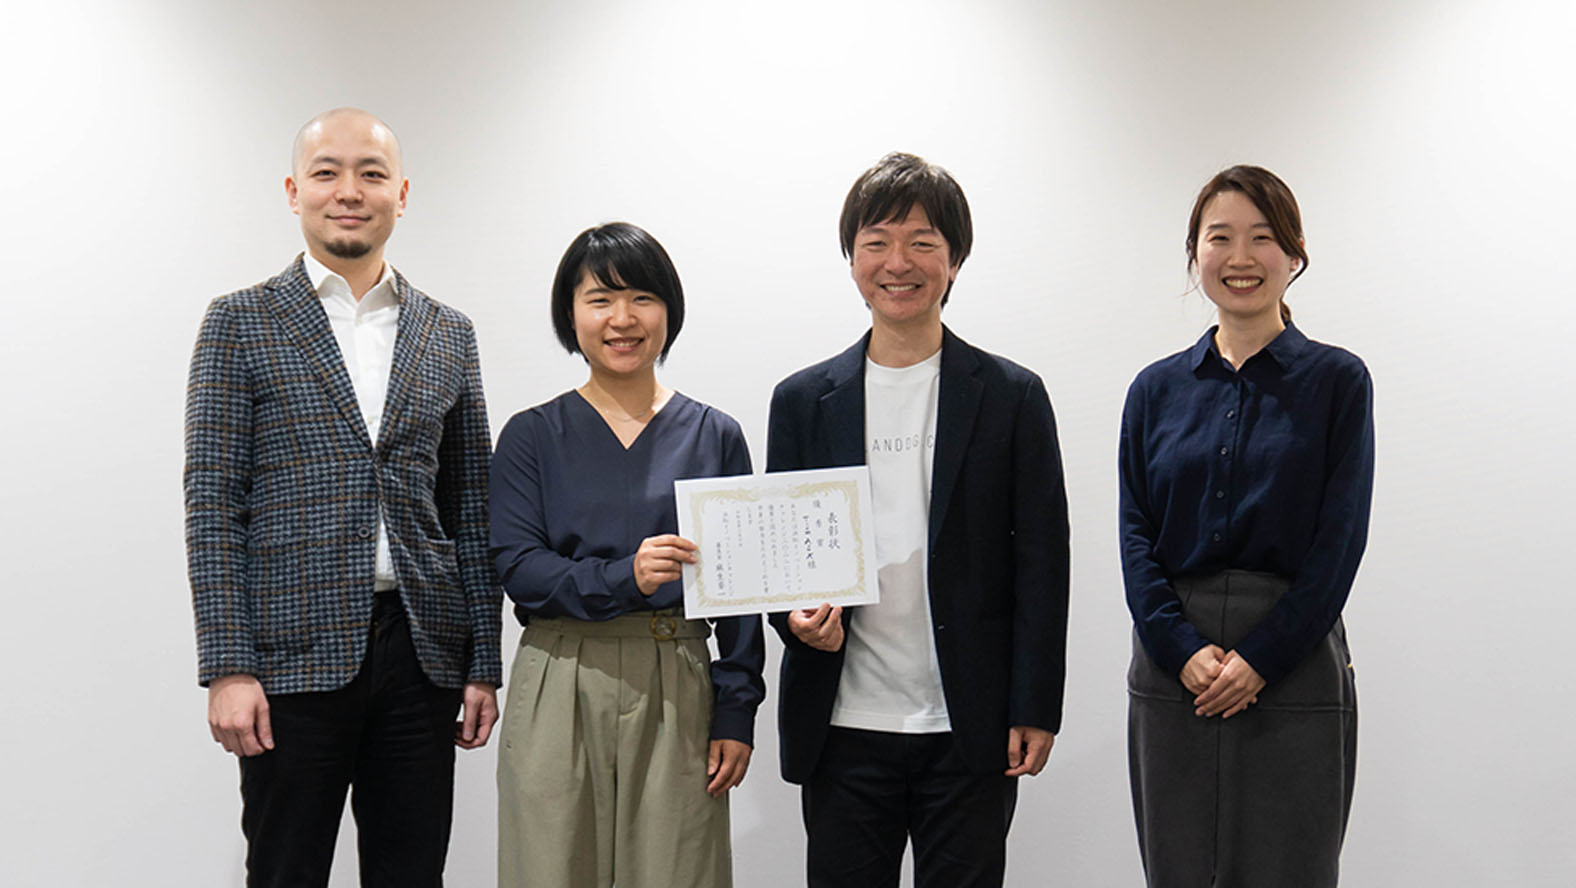 Roland DG team participated in the Hamamatsu Innovation Challenge 2022 program